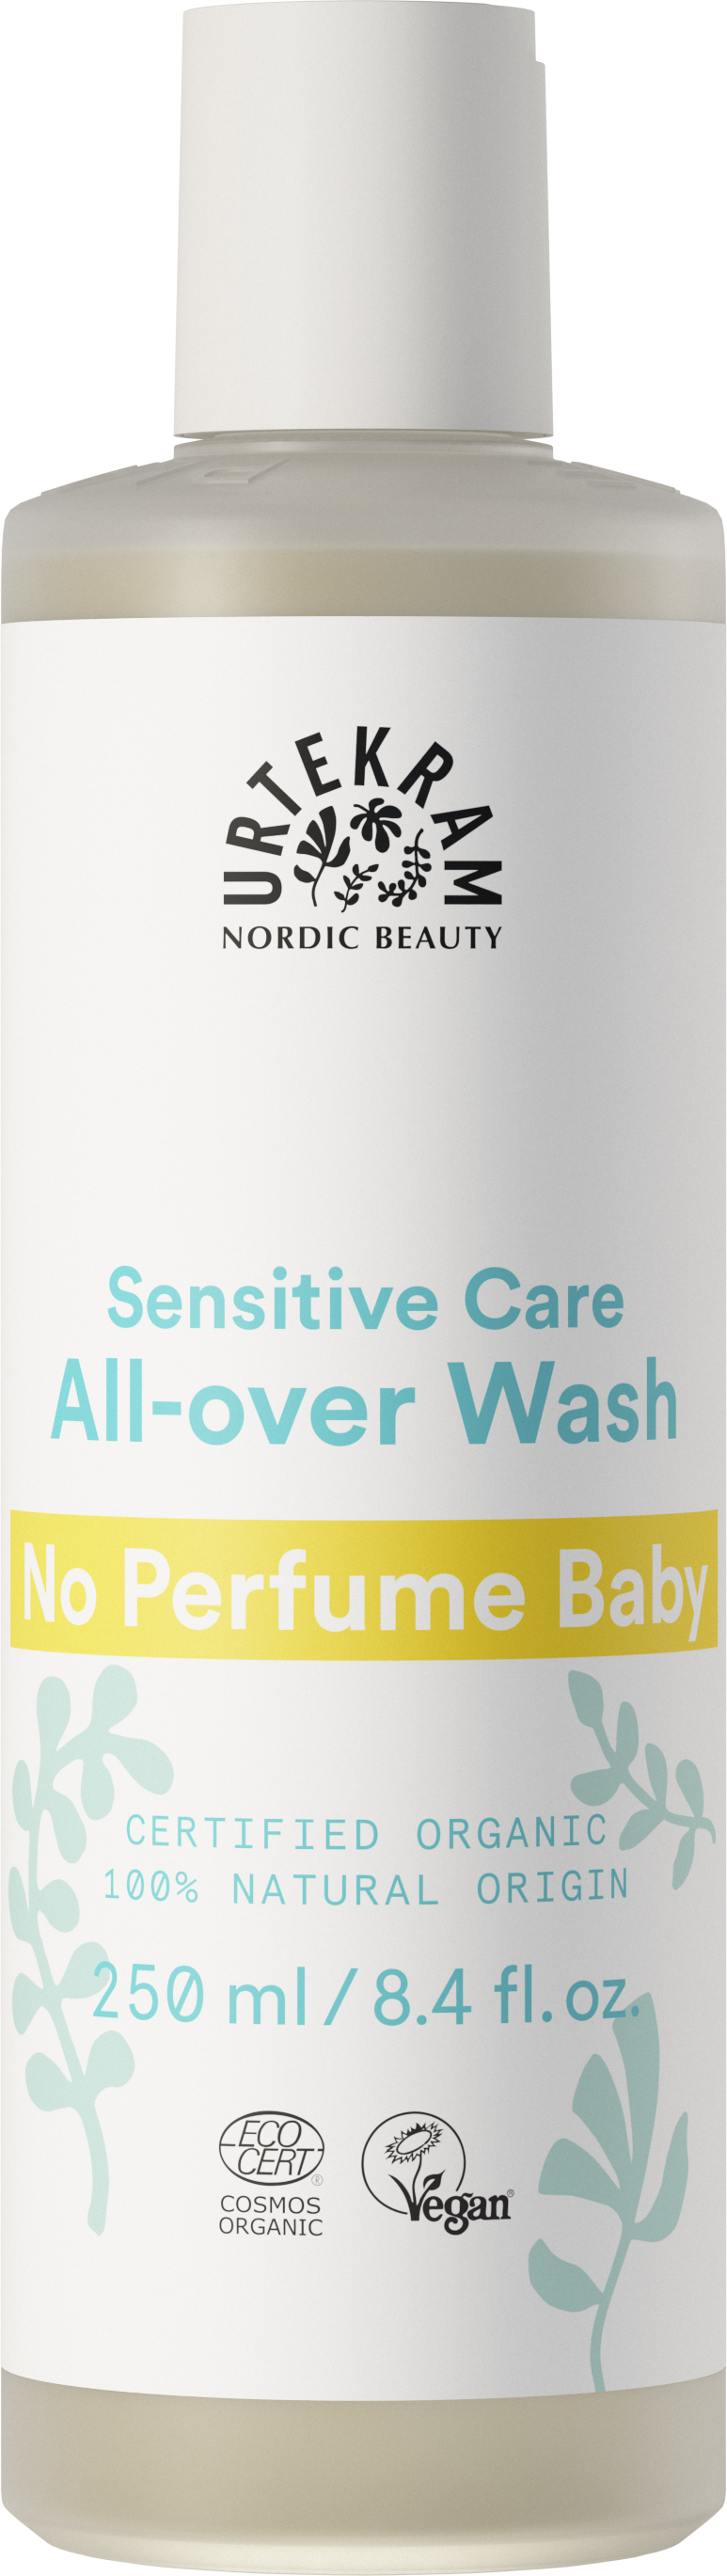 No Perfume Baby All-over Wash - Urtekram